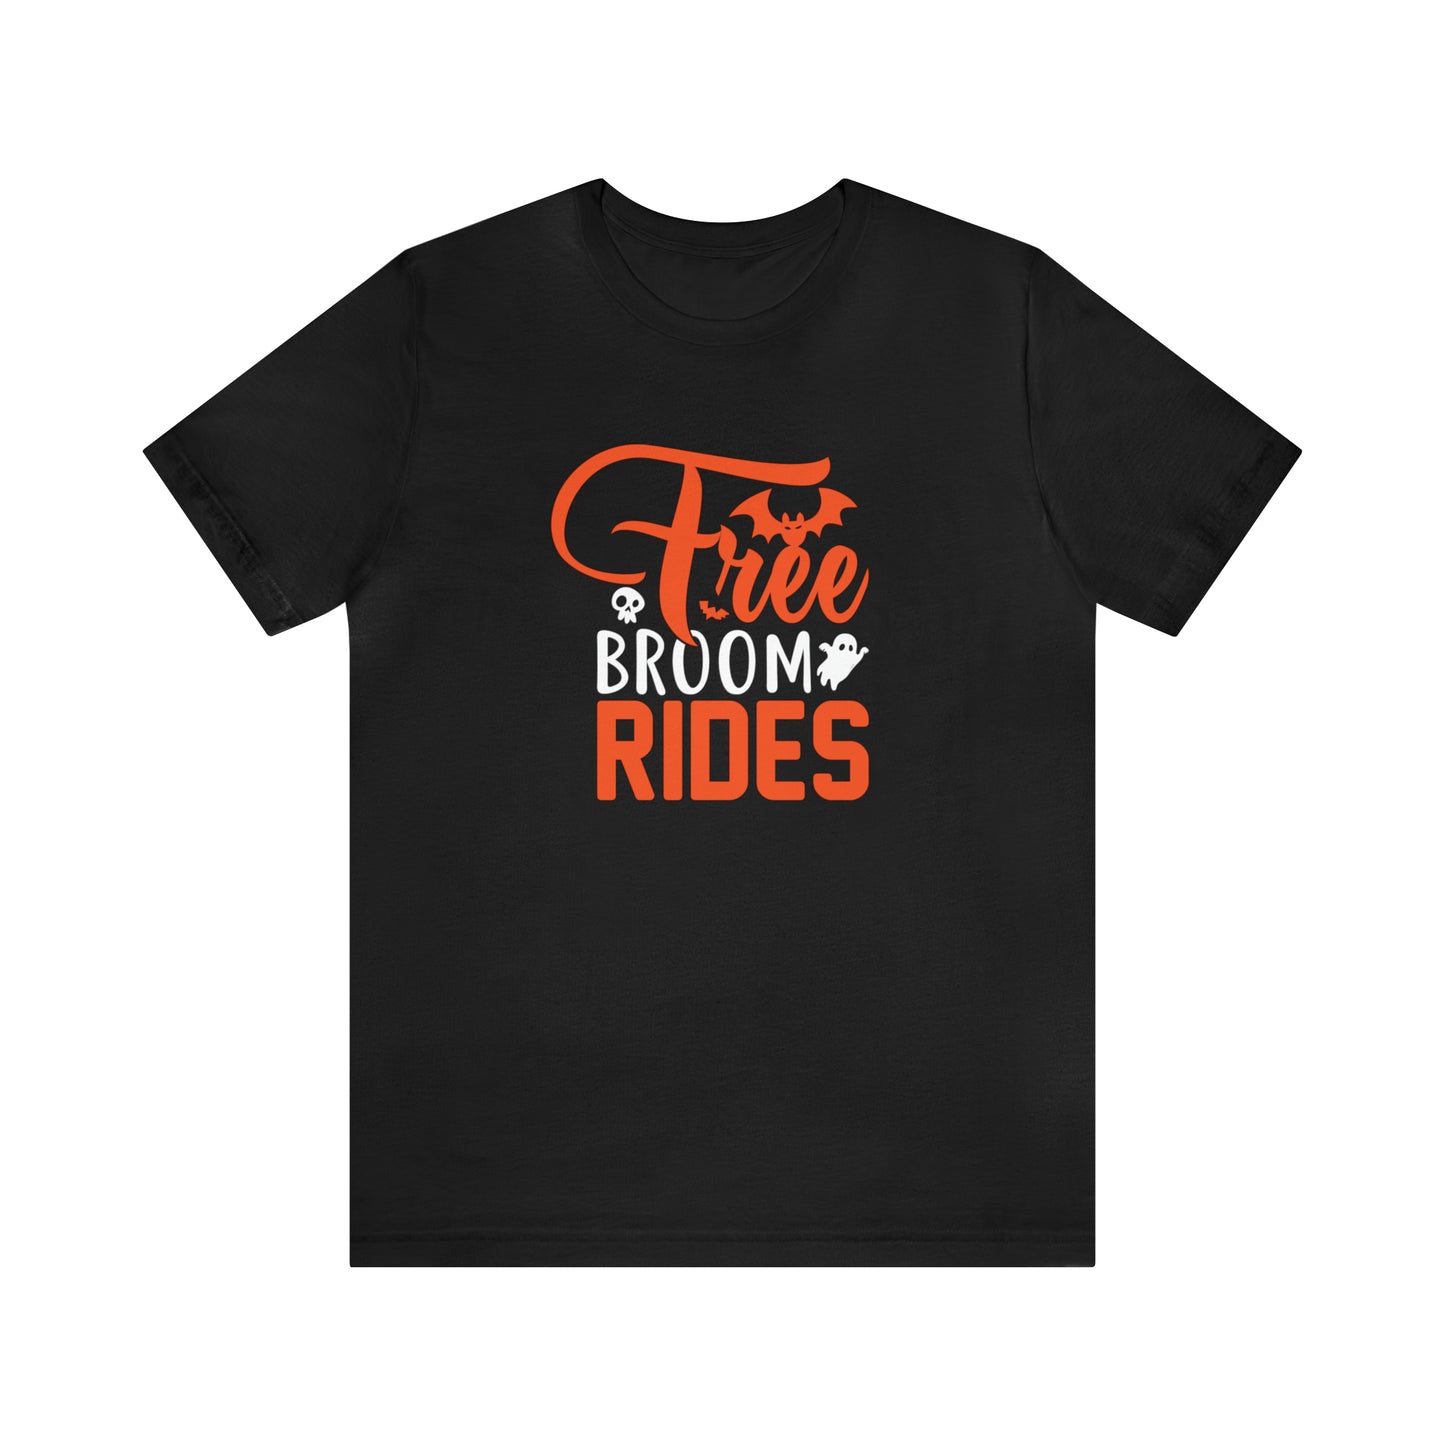 Free Broom Rides Halloween Tee